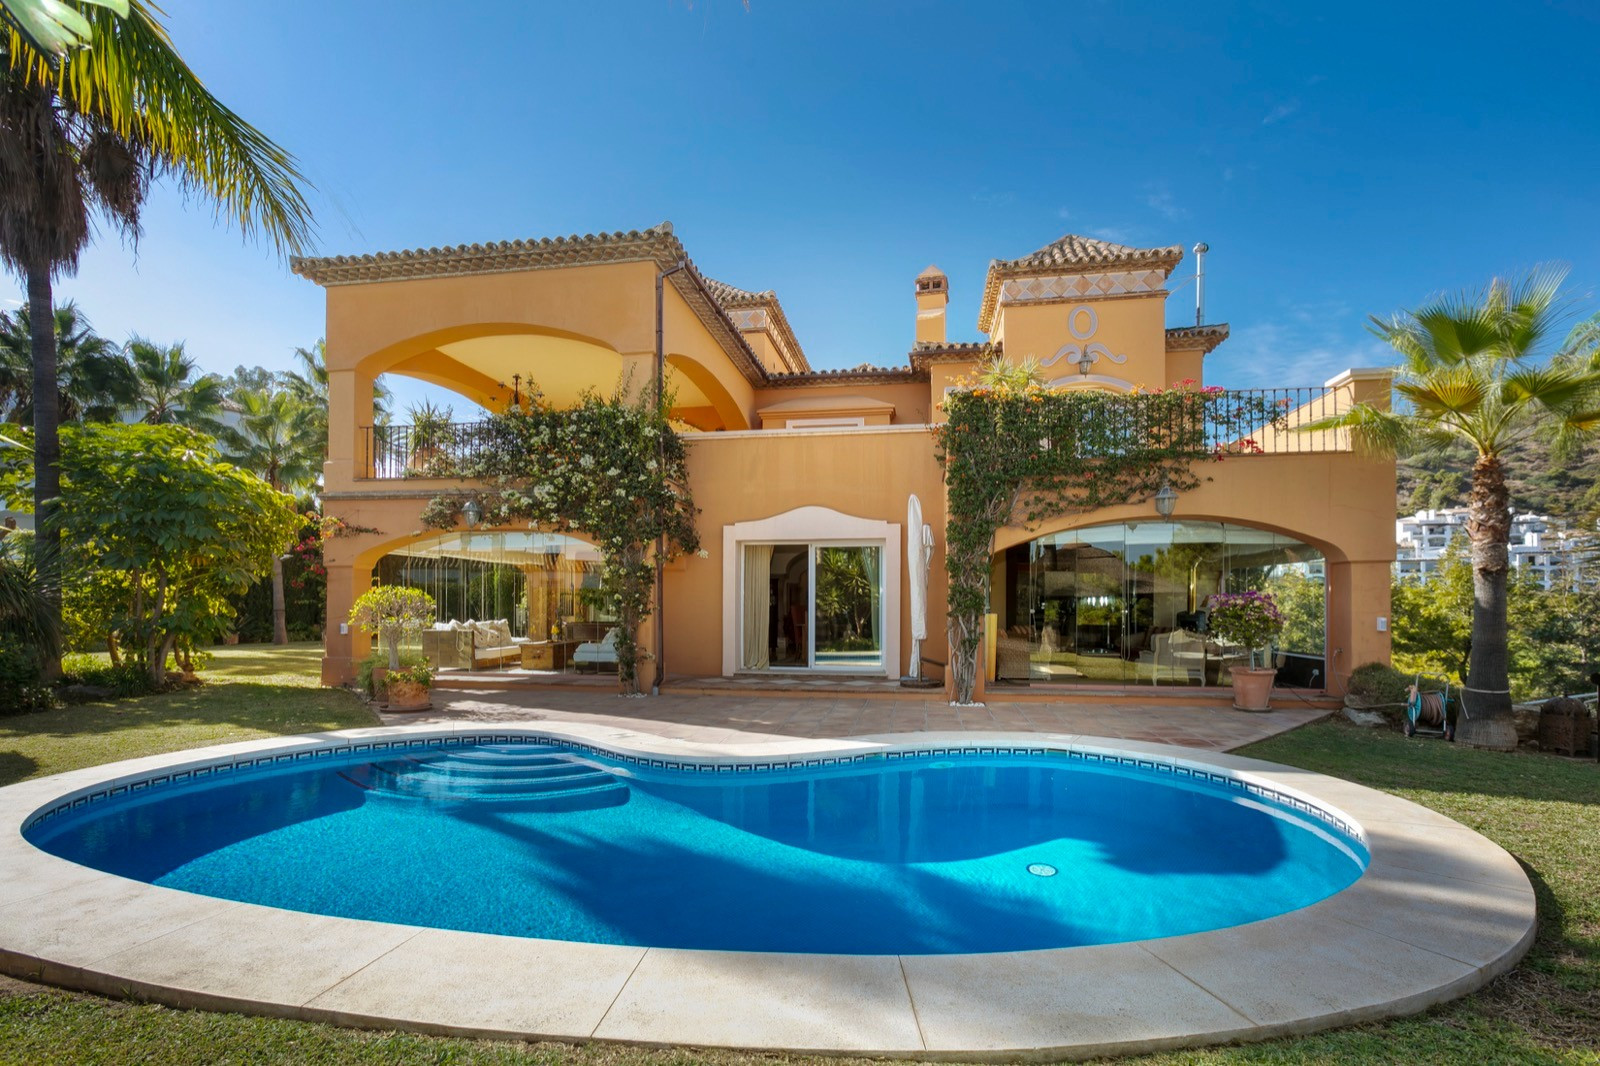 Authentic Mediterranean style villa set in the quiet and residential area of La Quinta